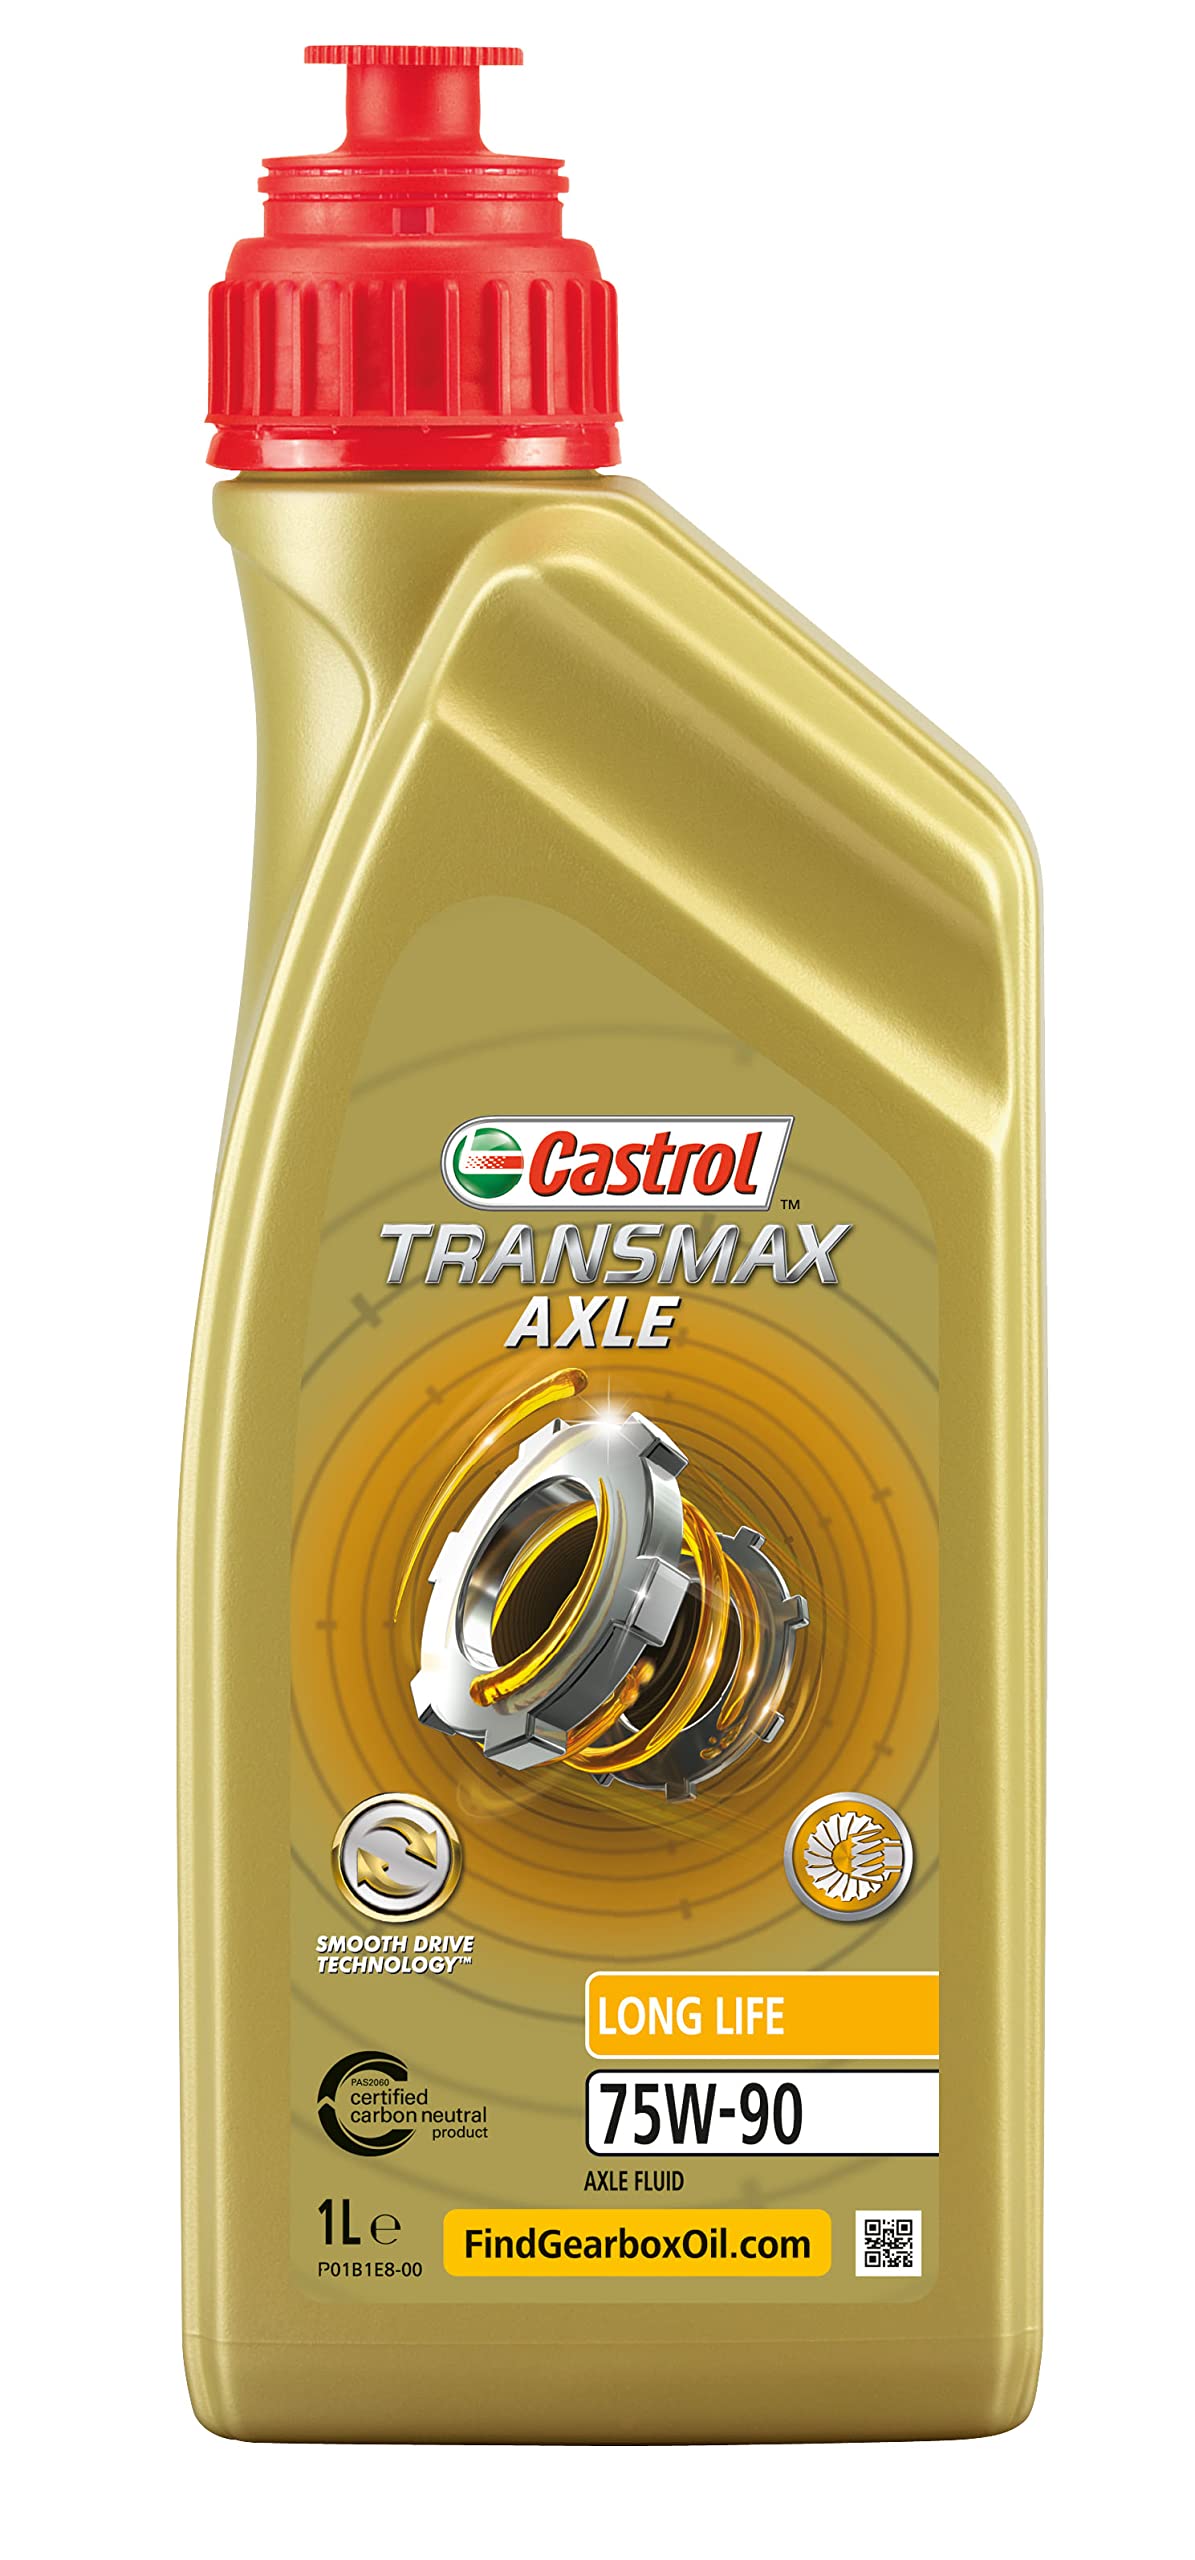 Castrol TRANSMAX Axle Long Life 75W-90, 1 Liter von Castrol